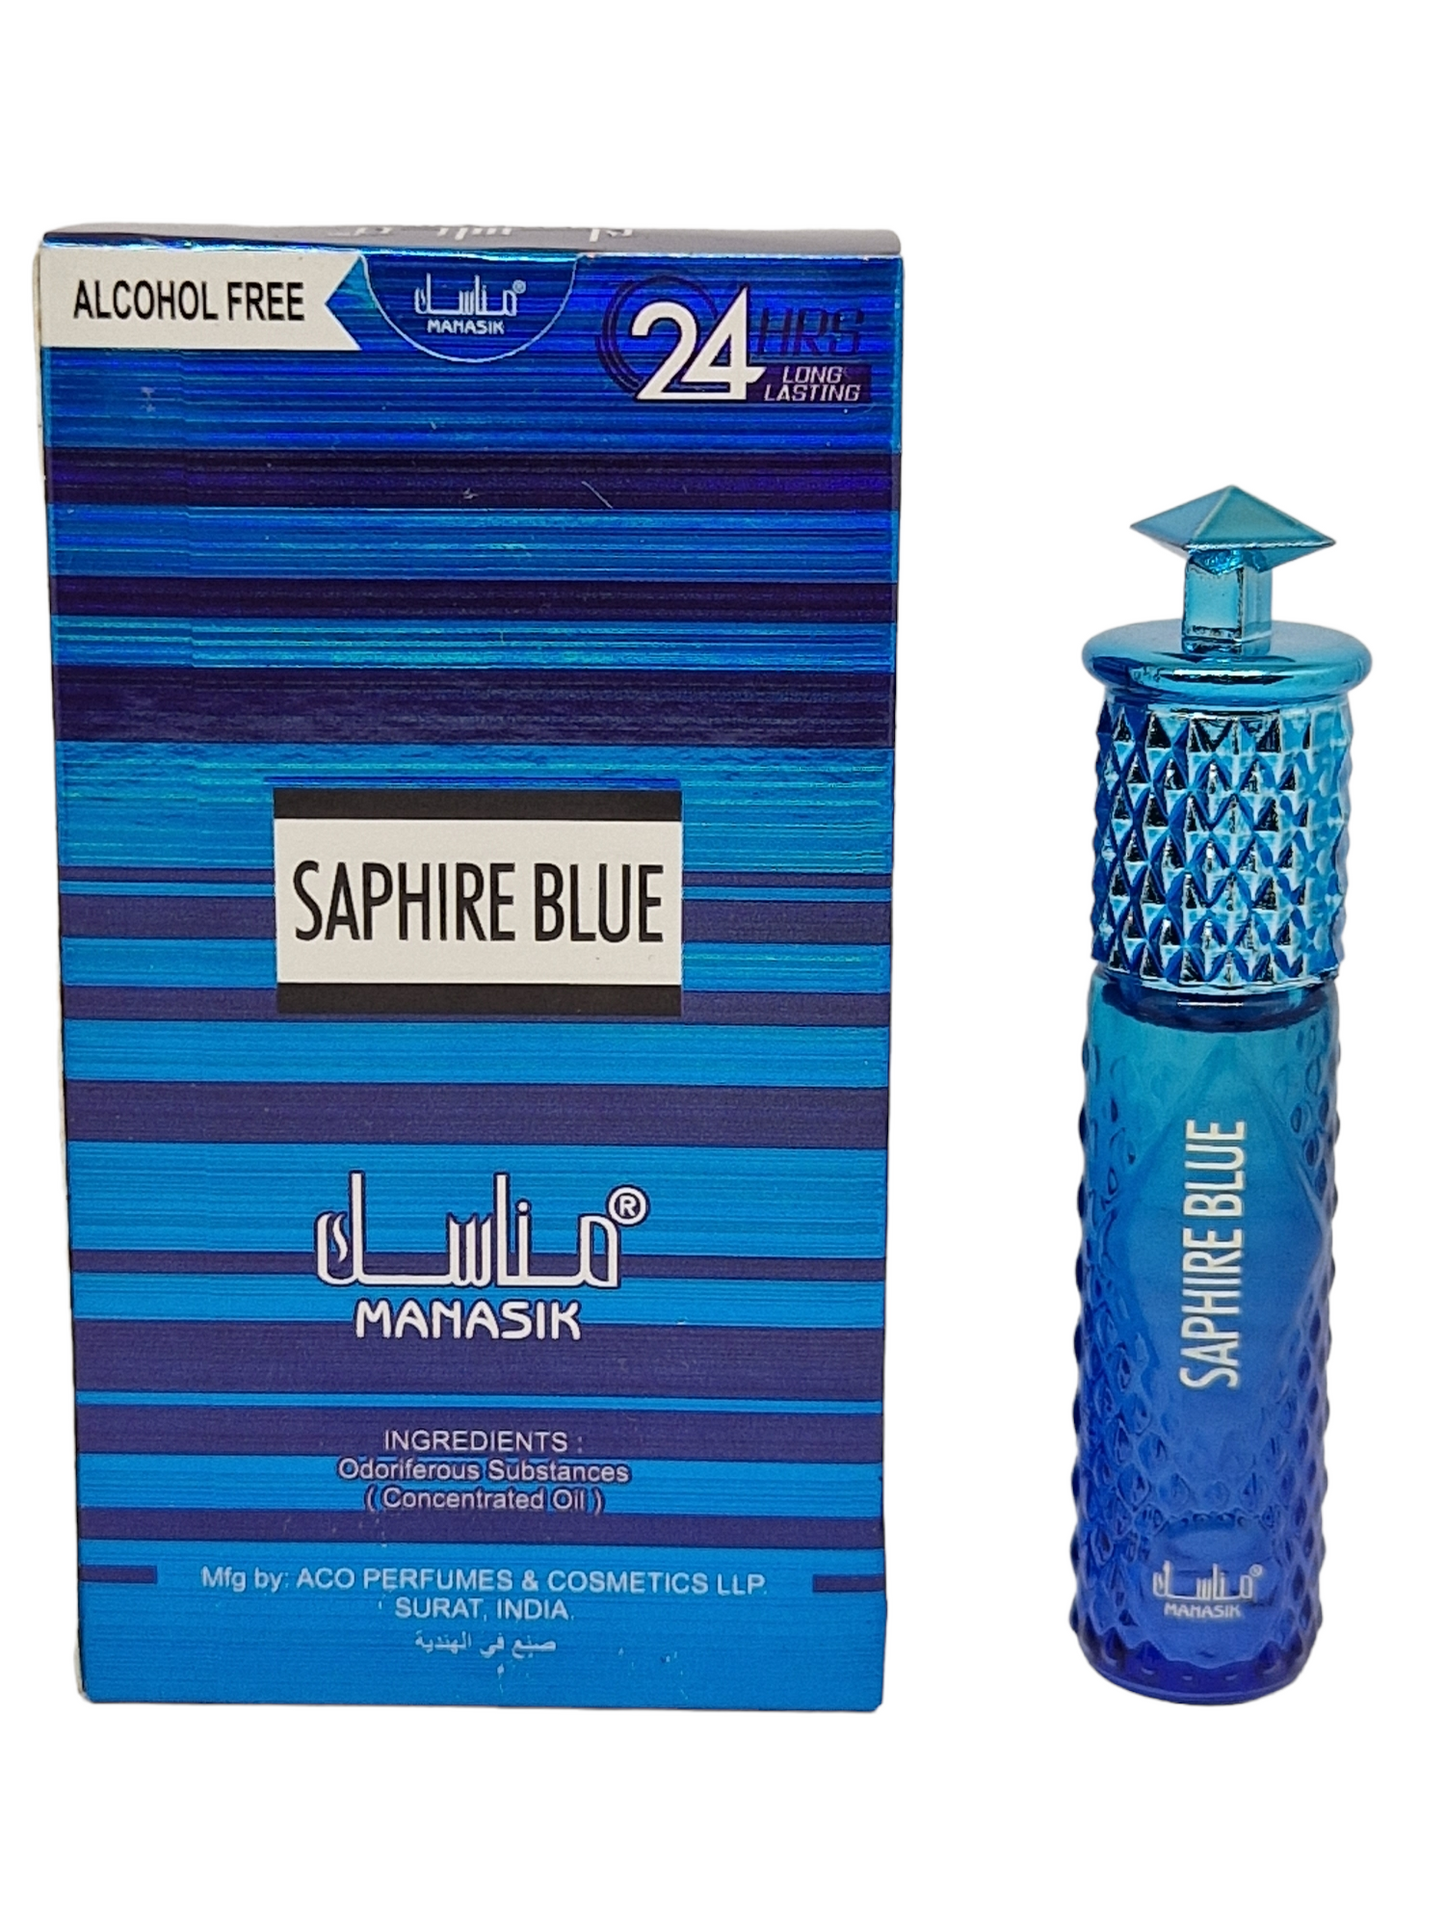 Saphire Blue - 6ml roll on - Manasik - Alcohol Free